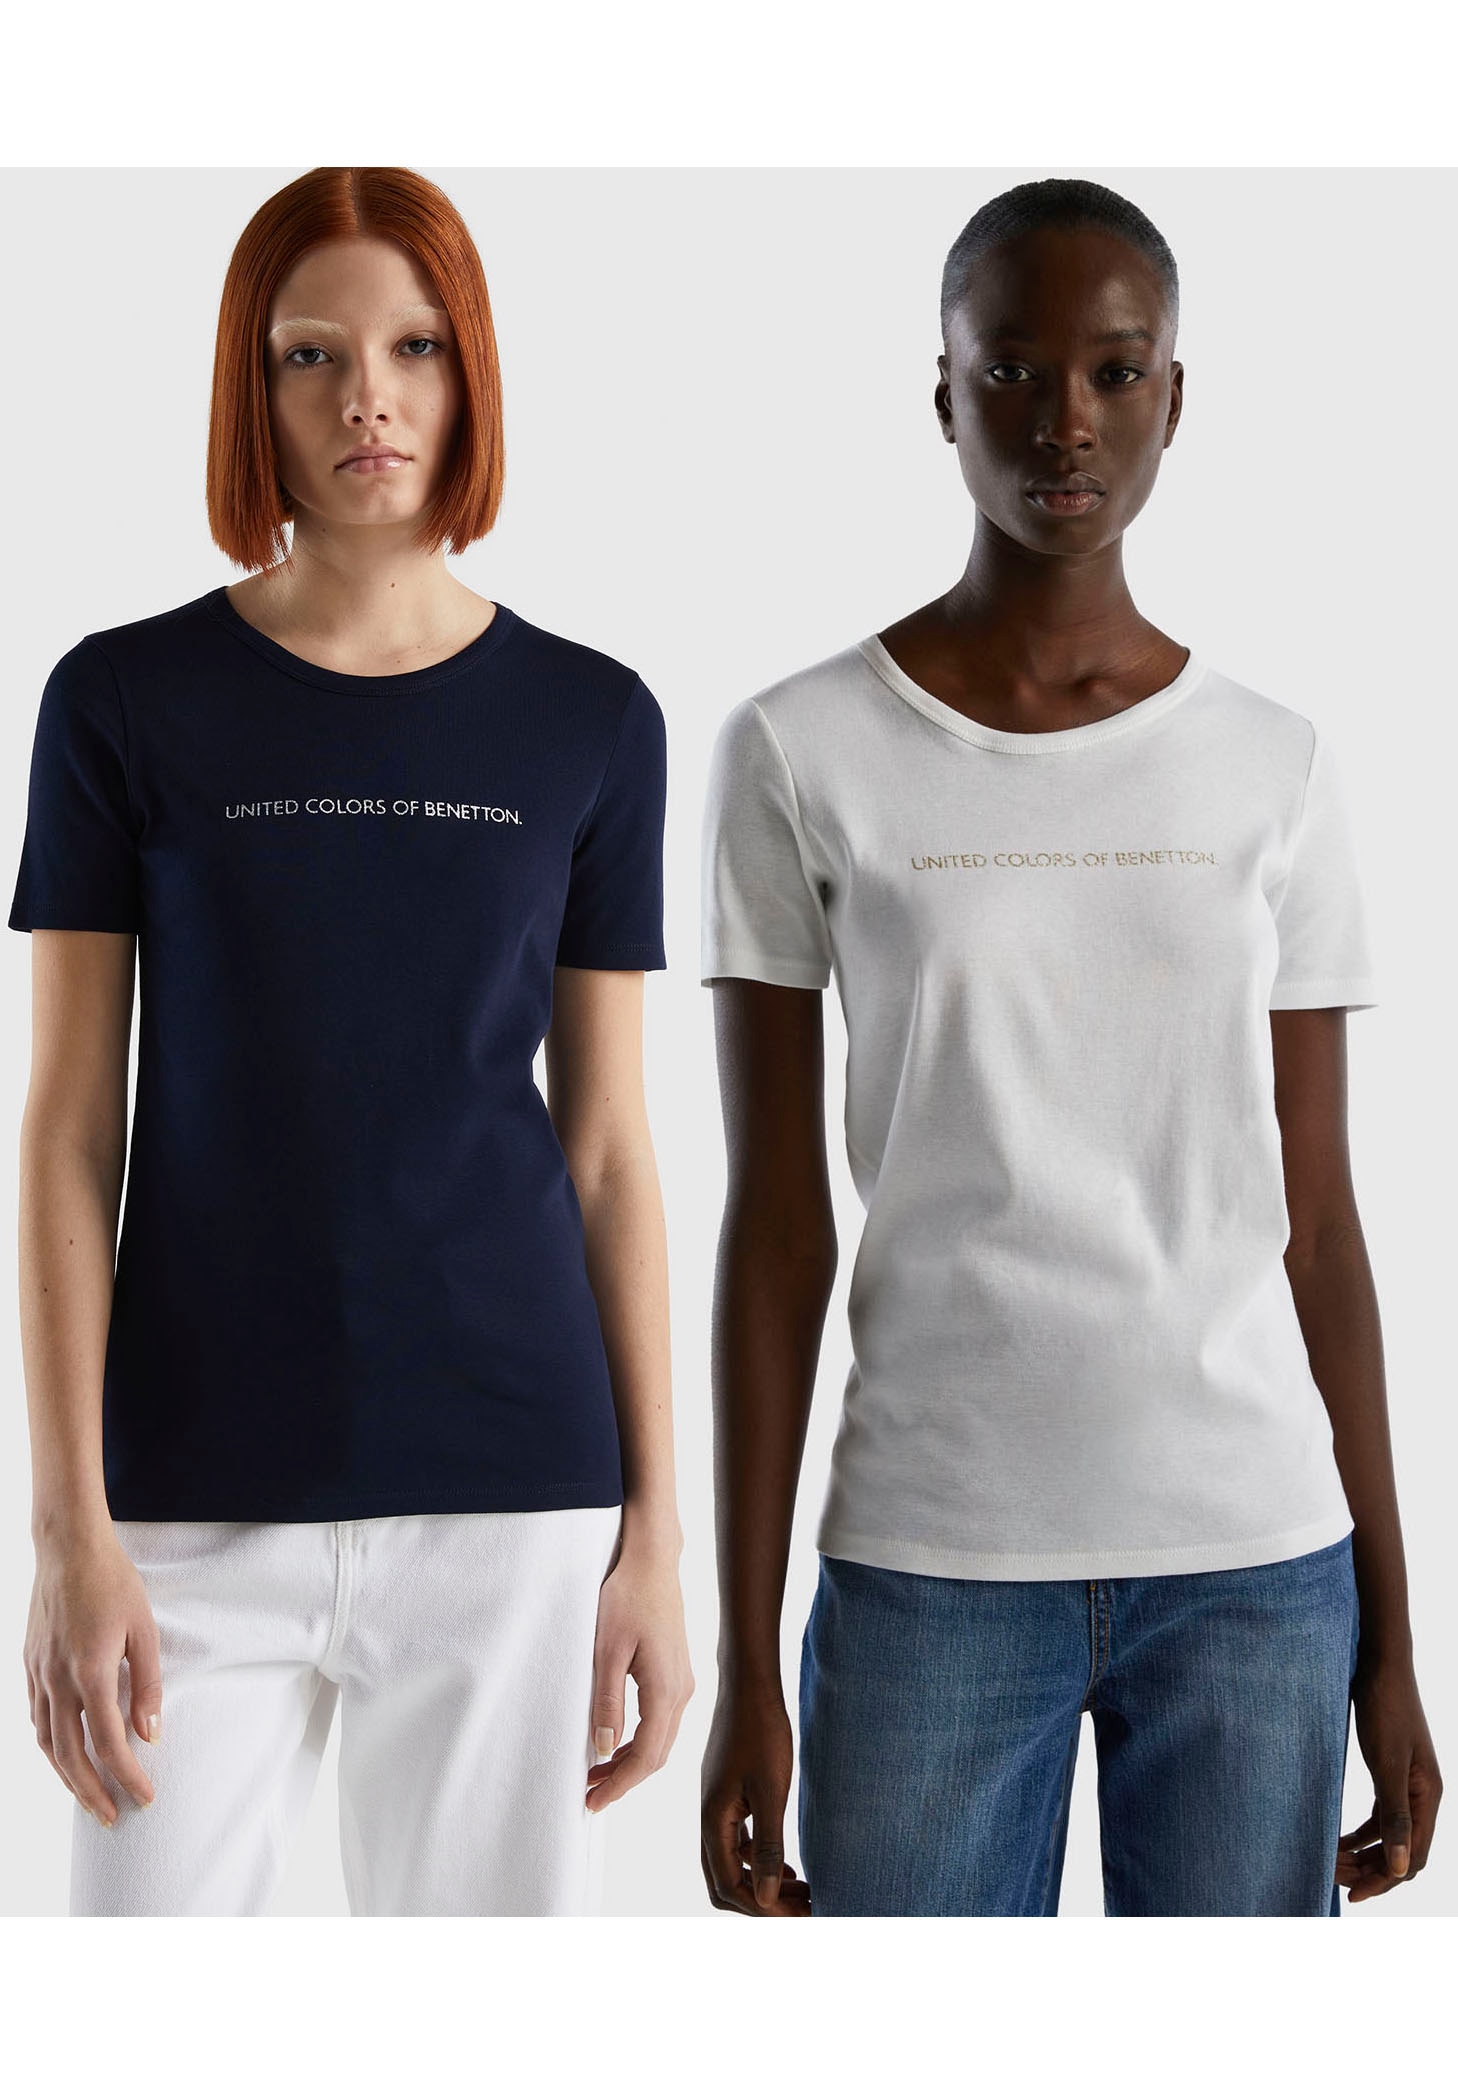 2 Colors United im tlg., Bestseller unsere 2), ♕ Benetton (Set, versandkostenfrei Doppelpack T-Shirt, kaufen of